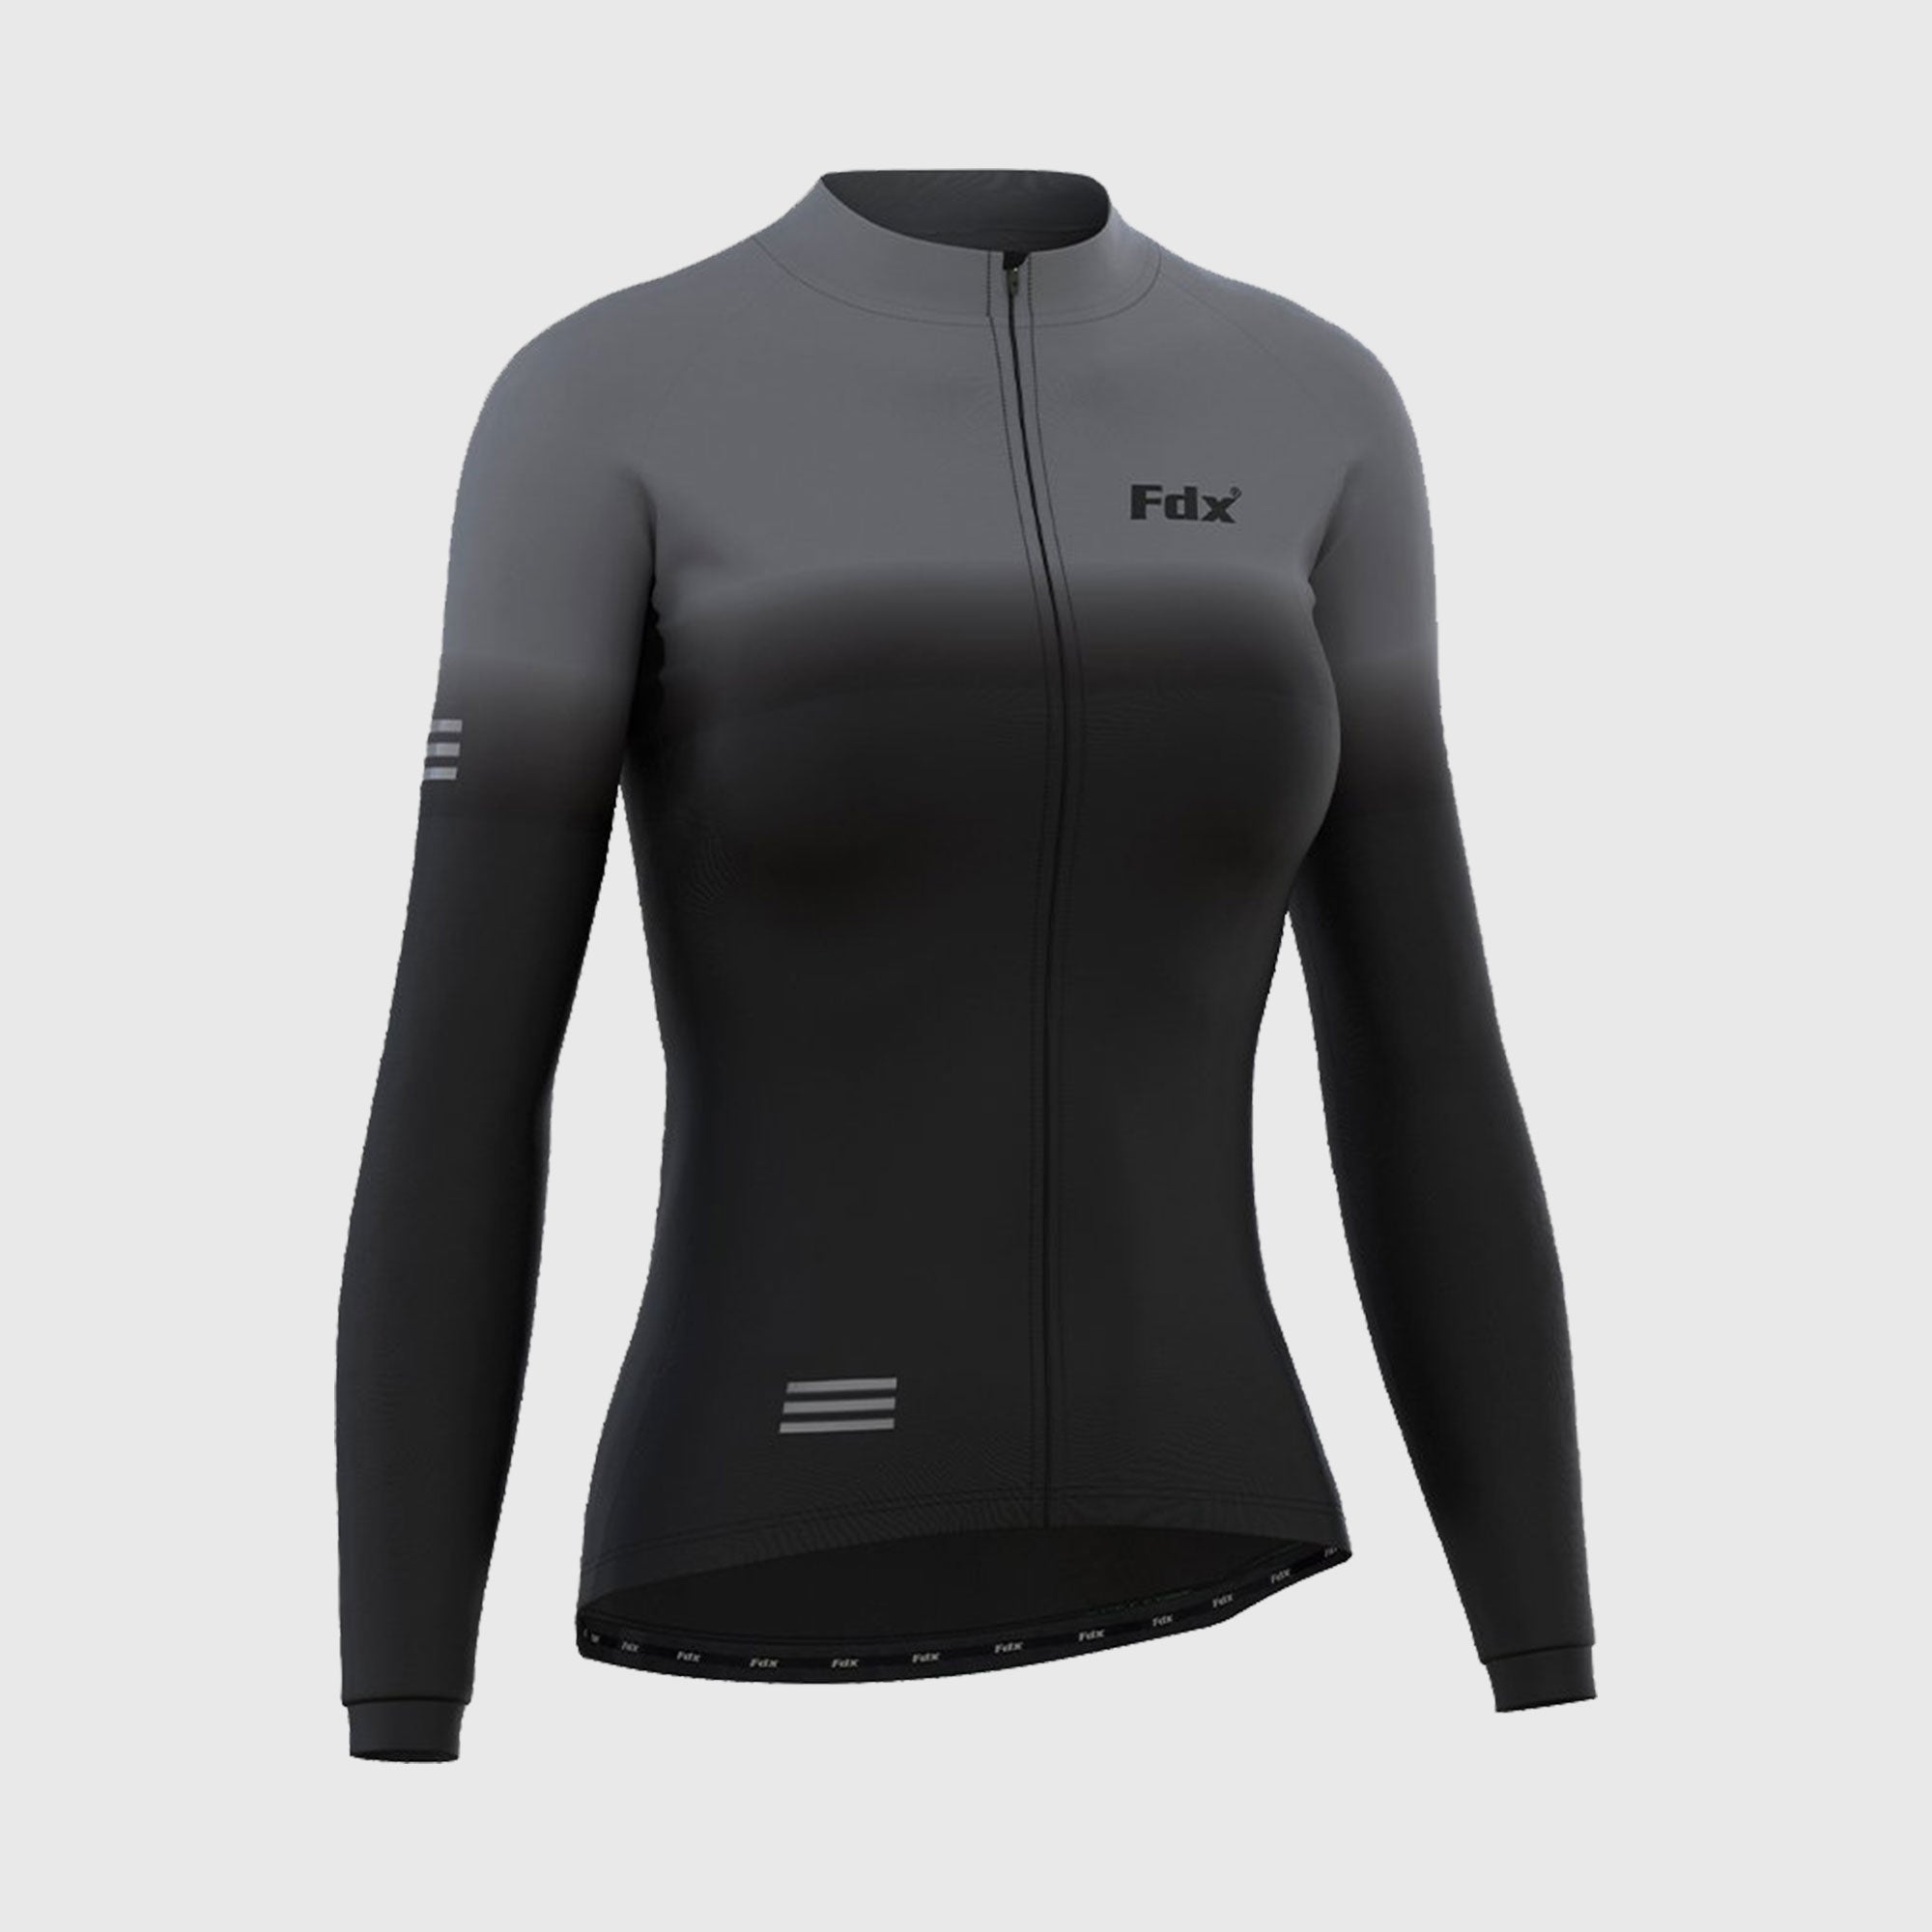 Fdx Duo Women's Grey / Black Long Sleeve Winter Cycling Jersey